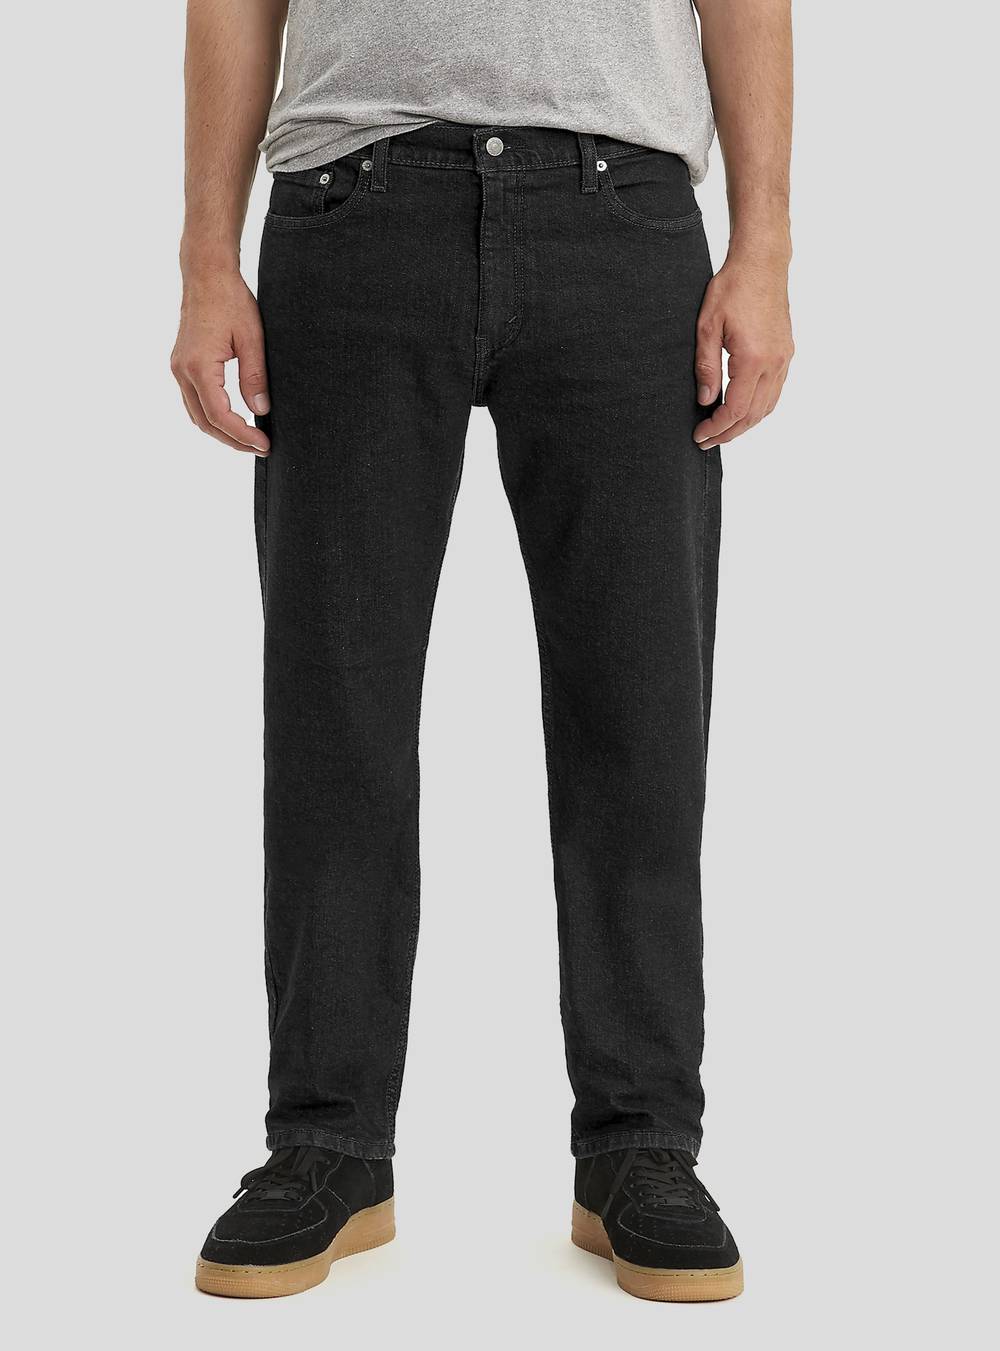 Levi's jeans 505 regular fit negro (color: negro. talla: cl 44 | us 32 | largo pierna 32)